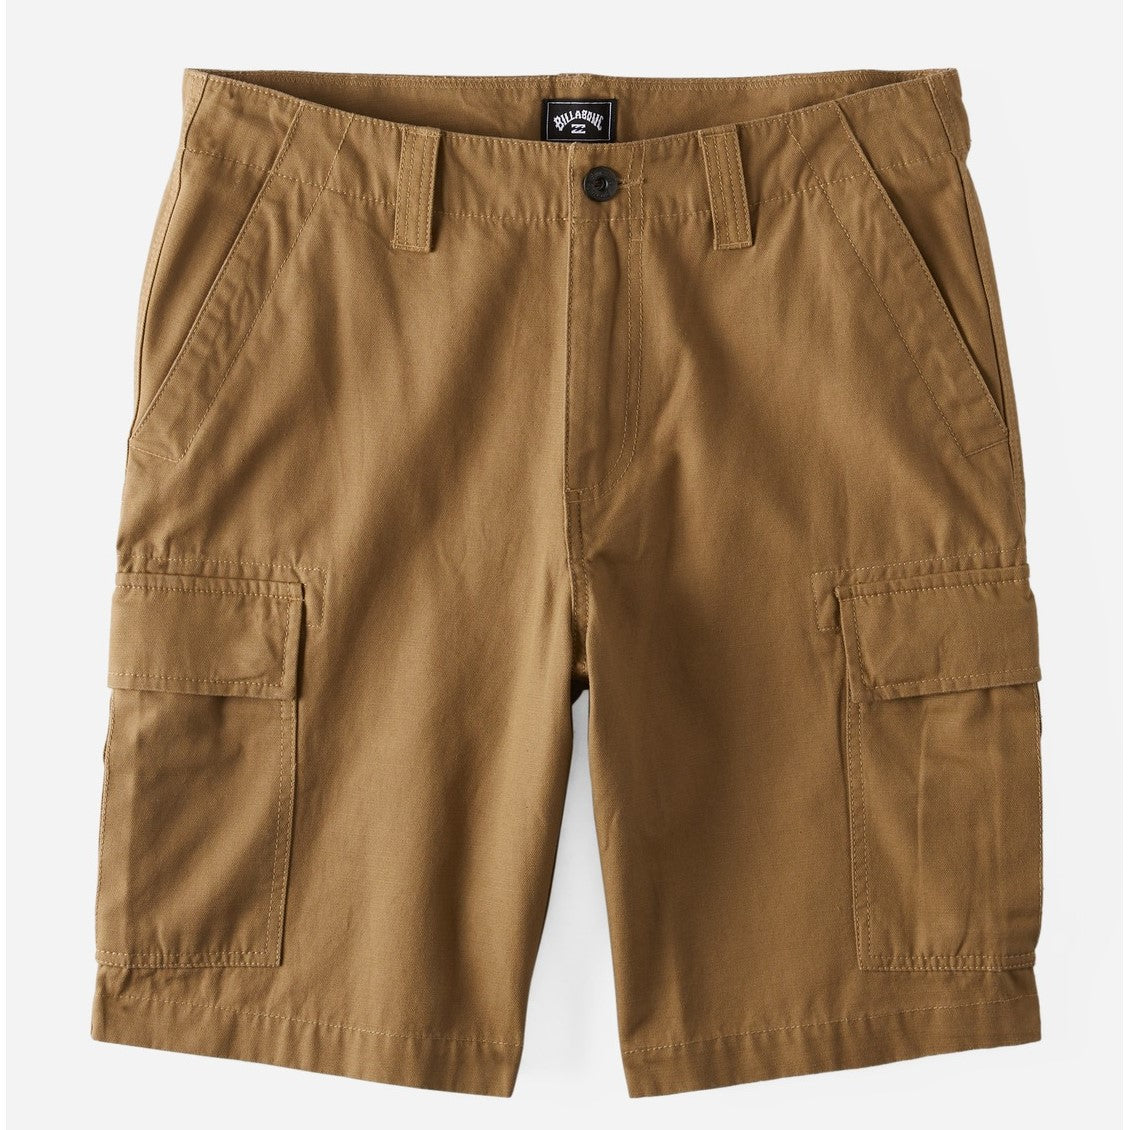 Billabong Cargo Shorts Men's (Khaki)